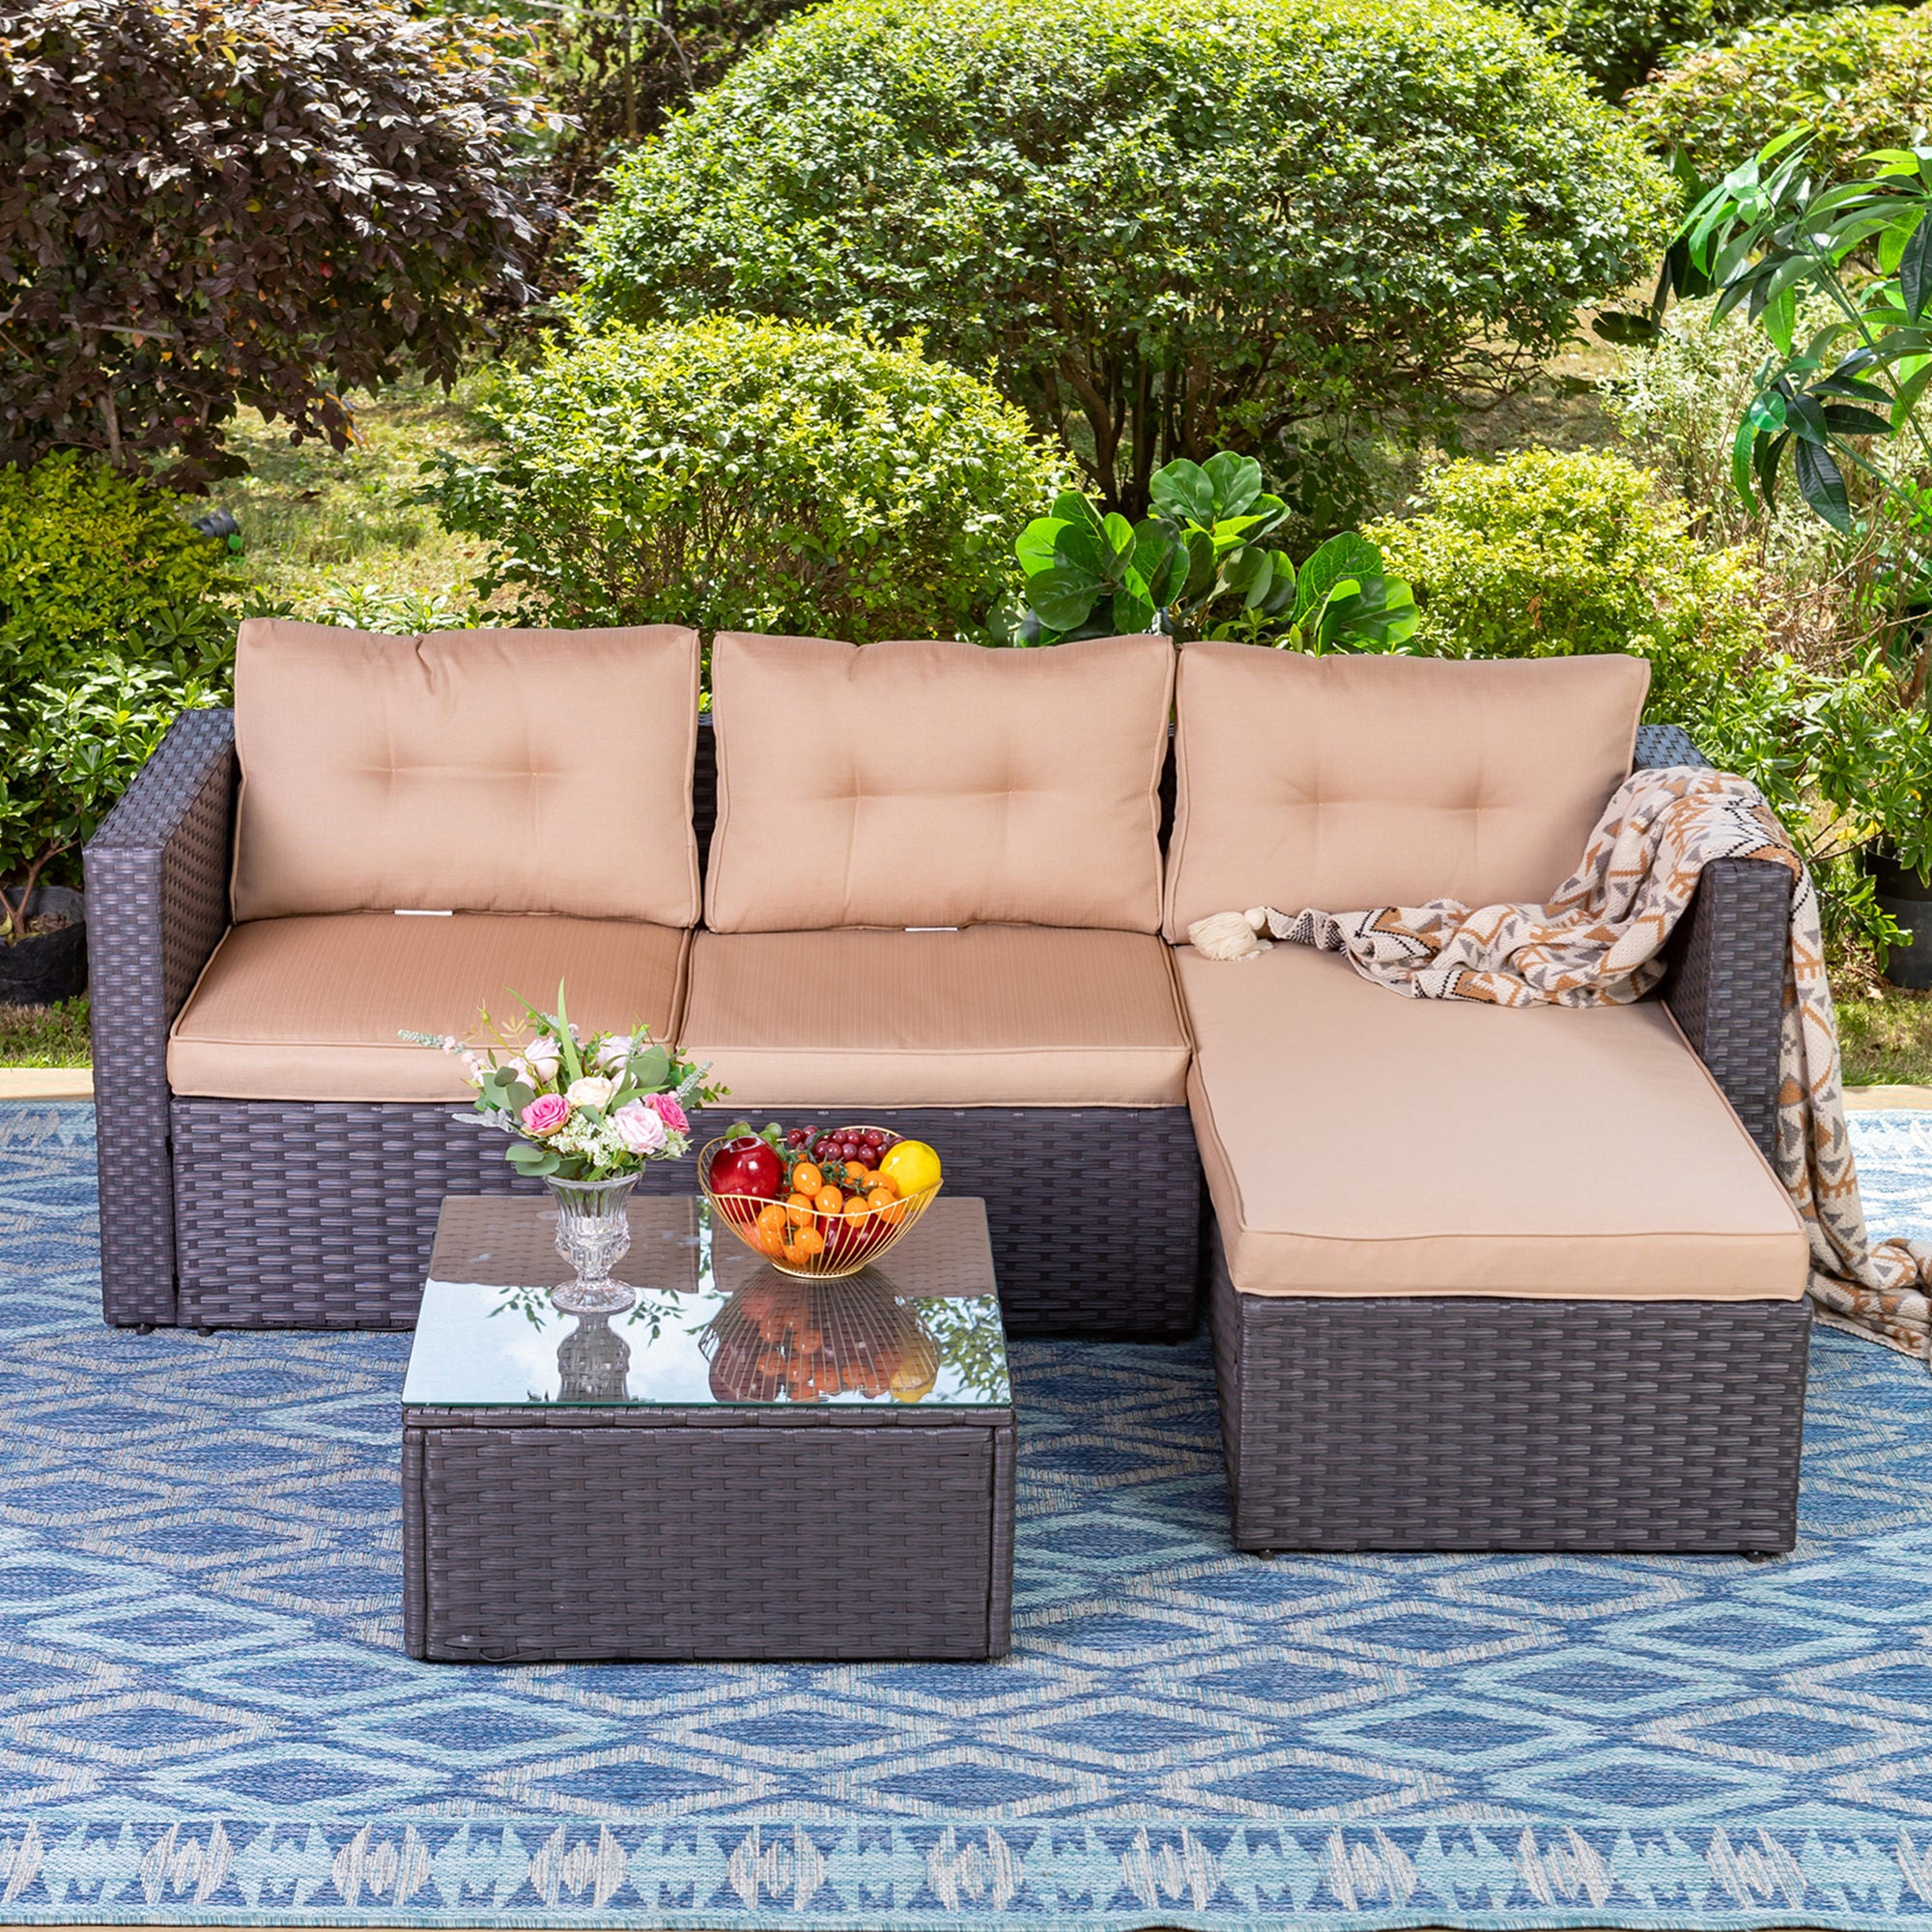 Sophia & William 3Pcs Outdoor Patio Wicker Rattan Sectional Sofa Set - Beige - image 1 of 7